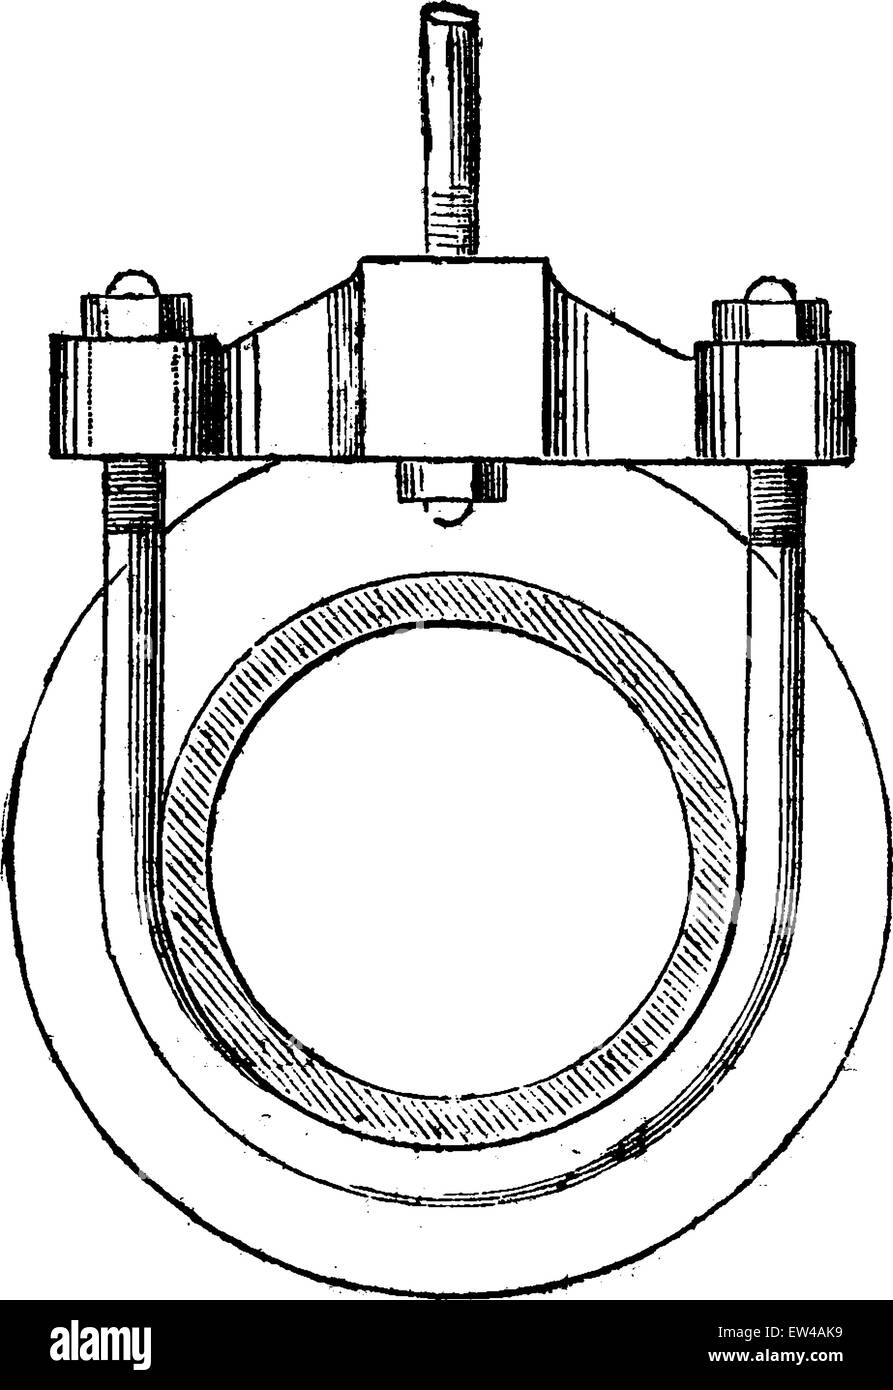 Bracket for suspension steam pipes in elevation, vintage engraved illustration. Industrial encyclopedia E.-O. Lami - 1875. Stock Vector